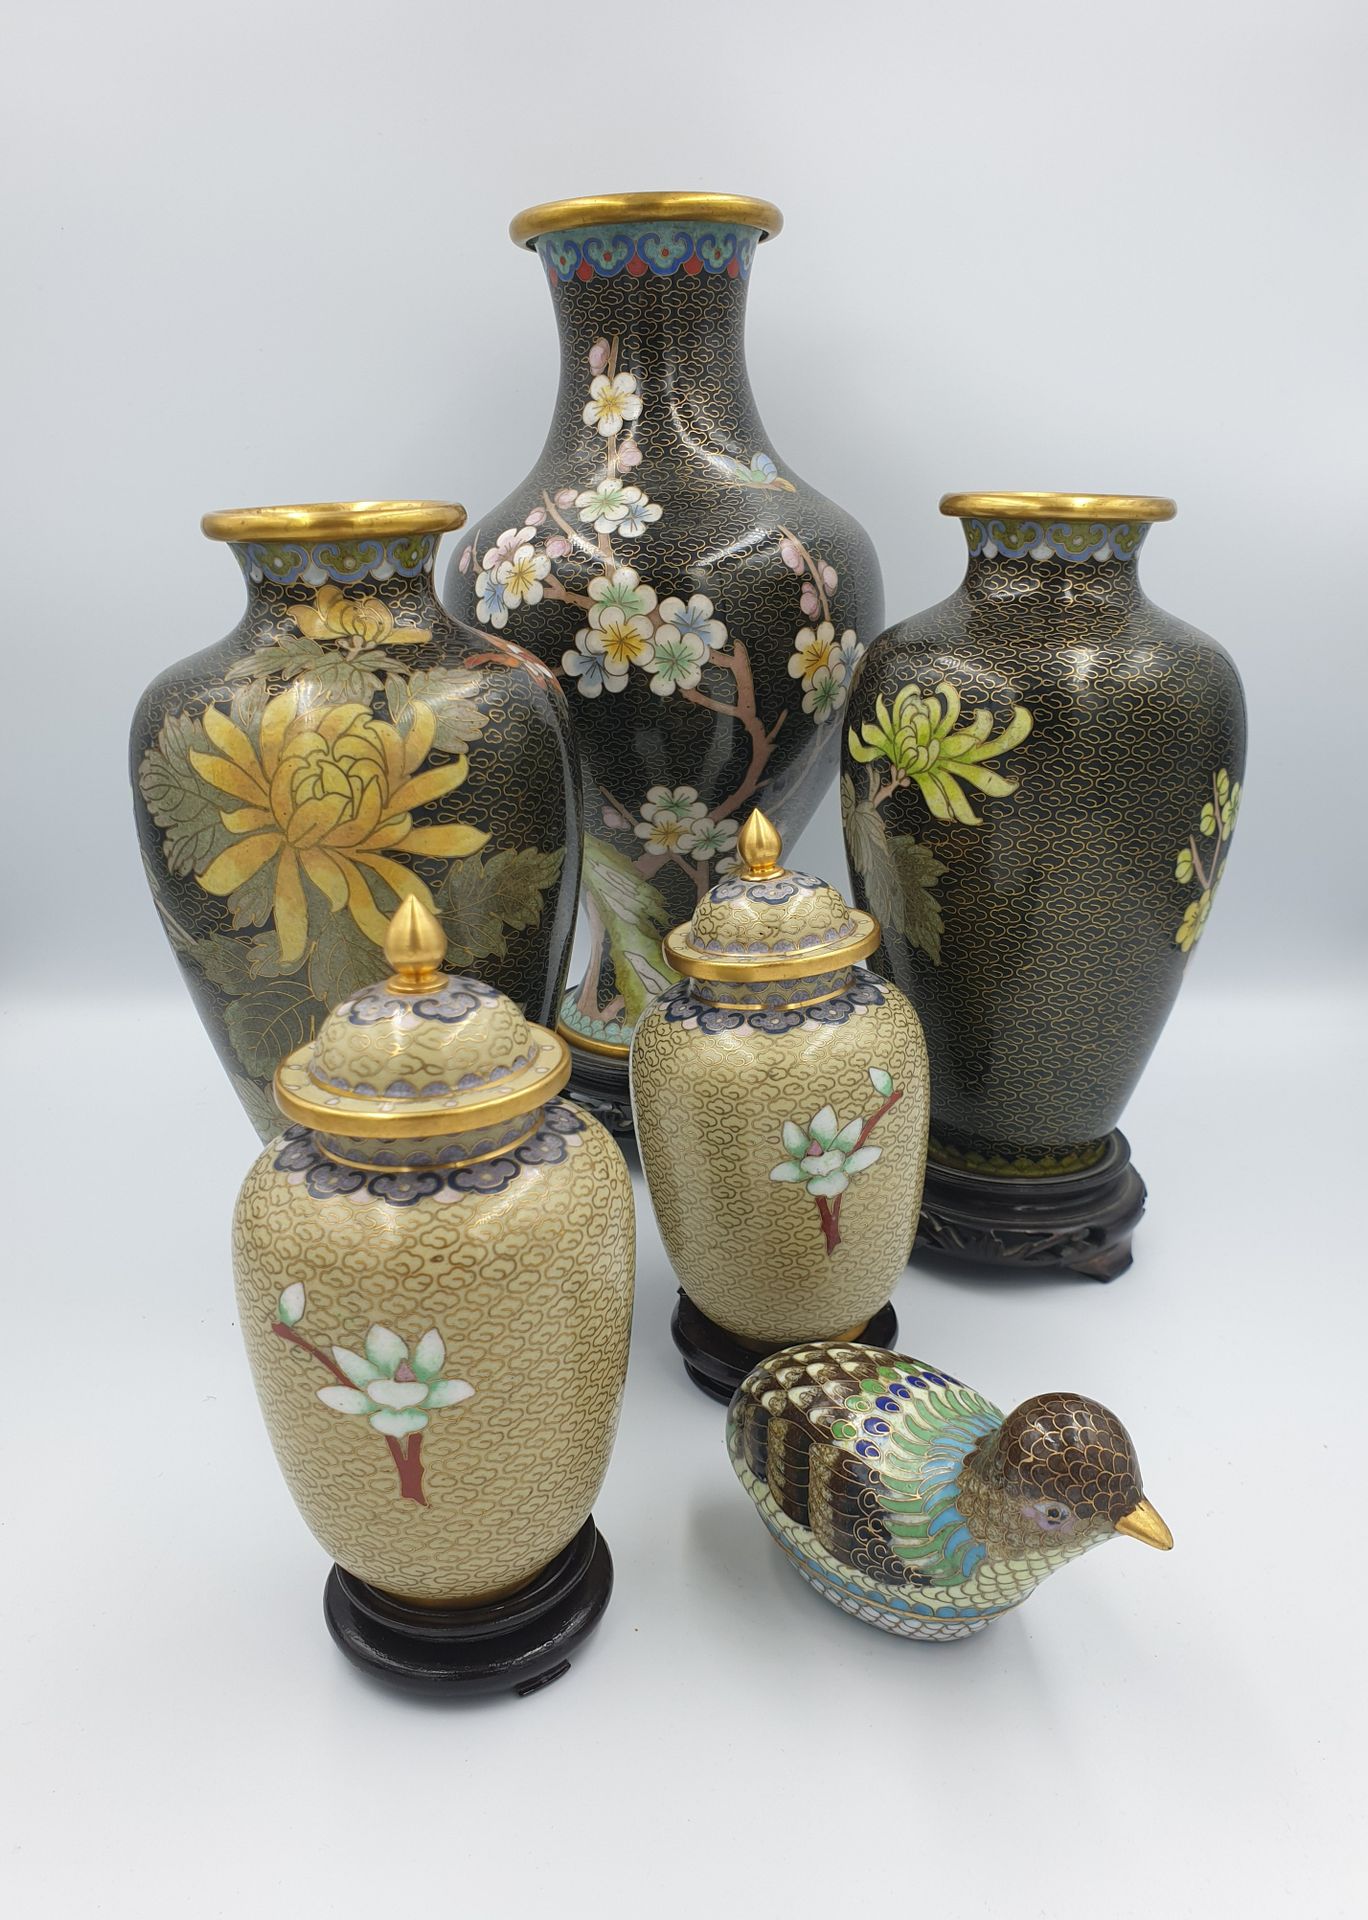 Null 本拍品包括三只巴洛克花瓶，两只小盖花瓶和一个掐丝珐琅鸭子盒。五个花瓶的木制底座。

H.最大的一个29厘米，带底座